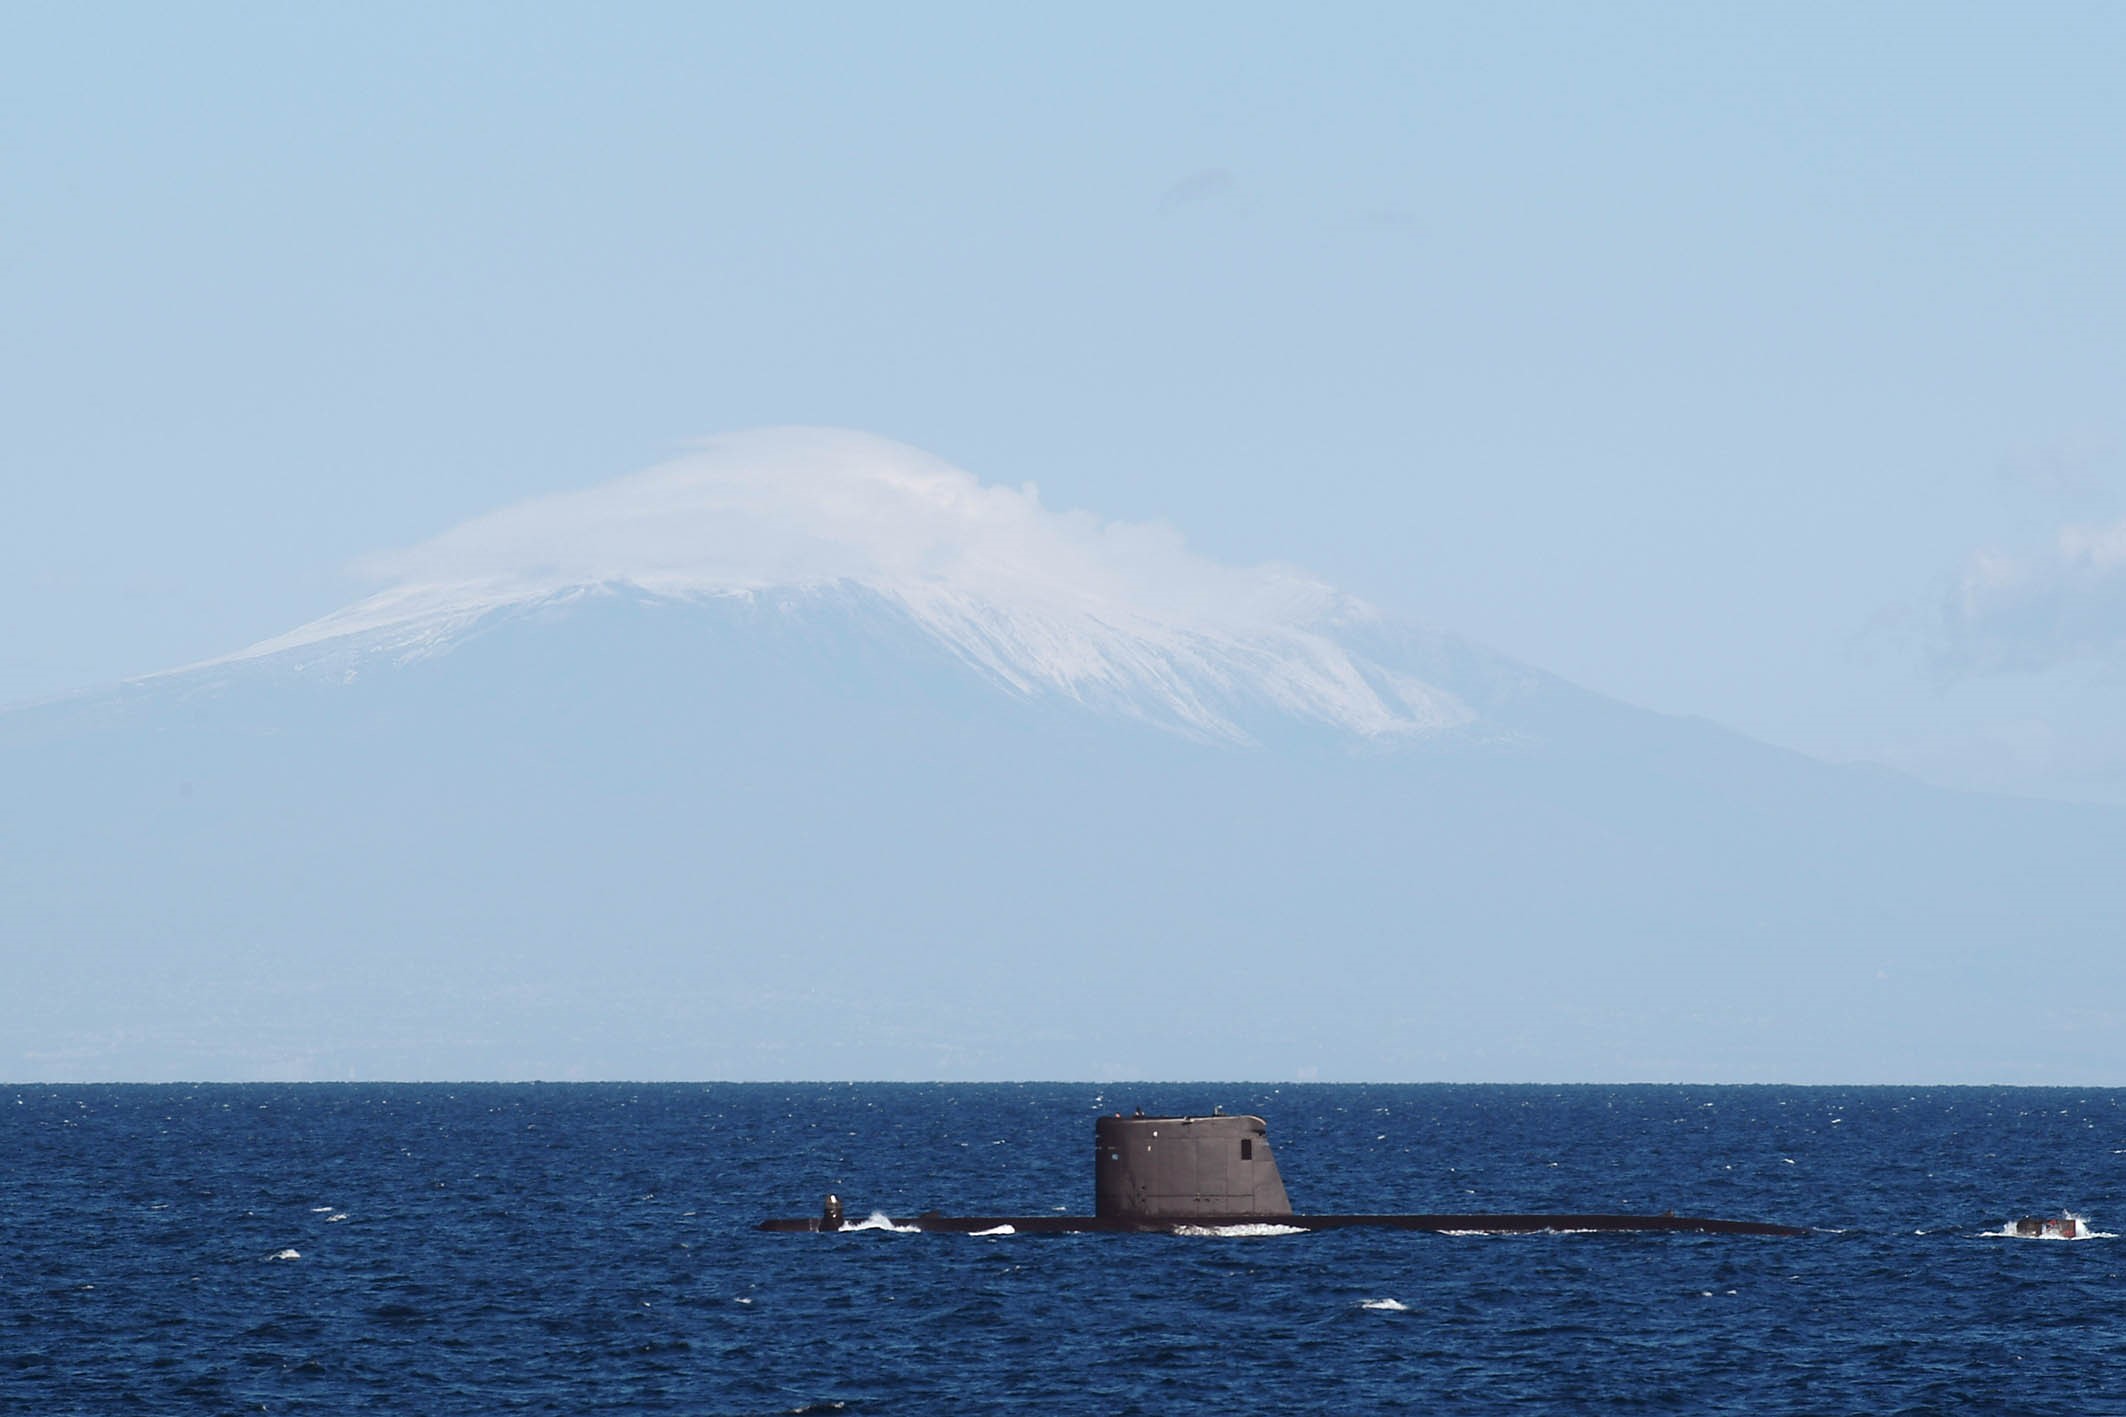 The submarine sailing in Mediterranean waters